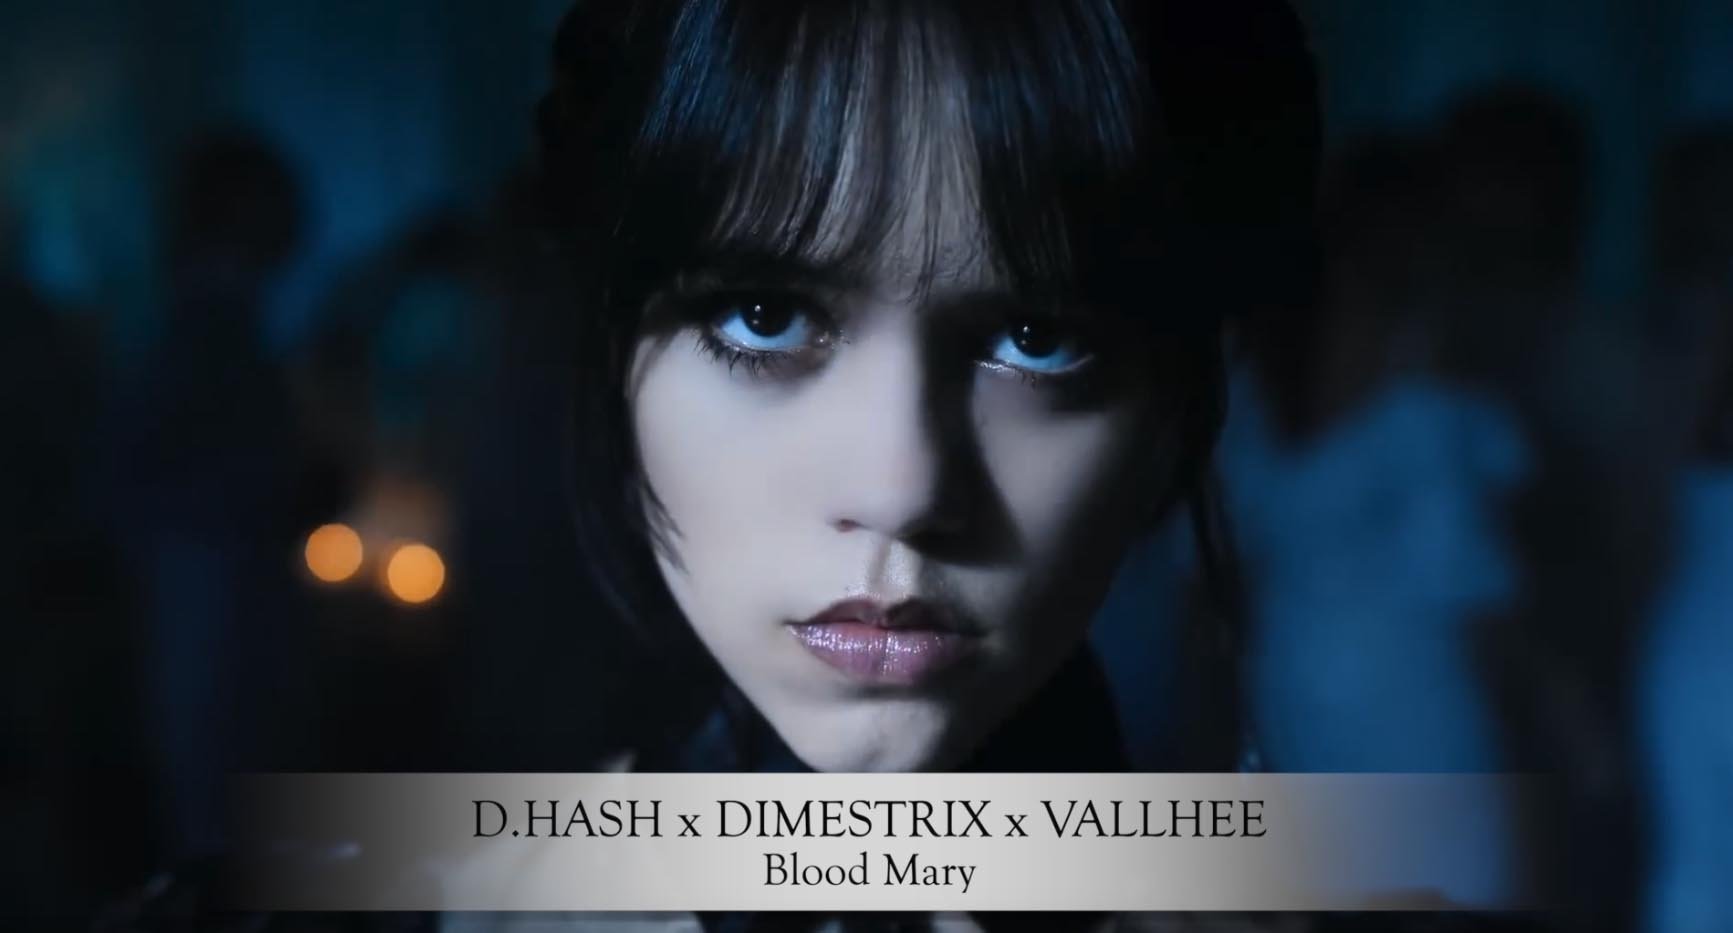 D.HASH x DIMESTRIX x VALLHEE - Blood Mary